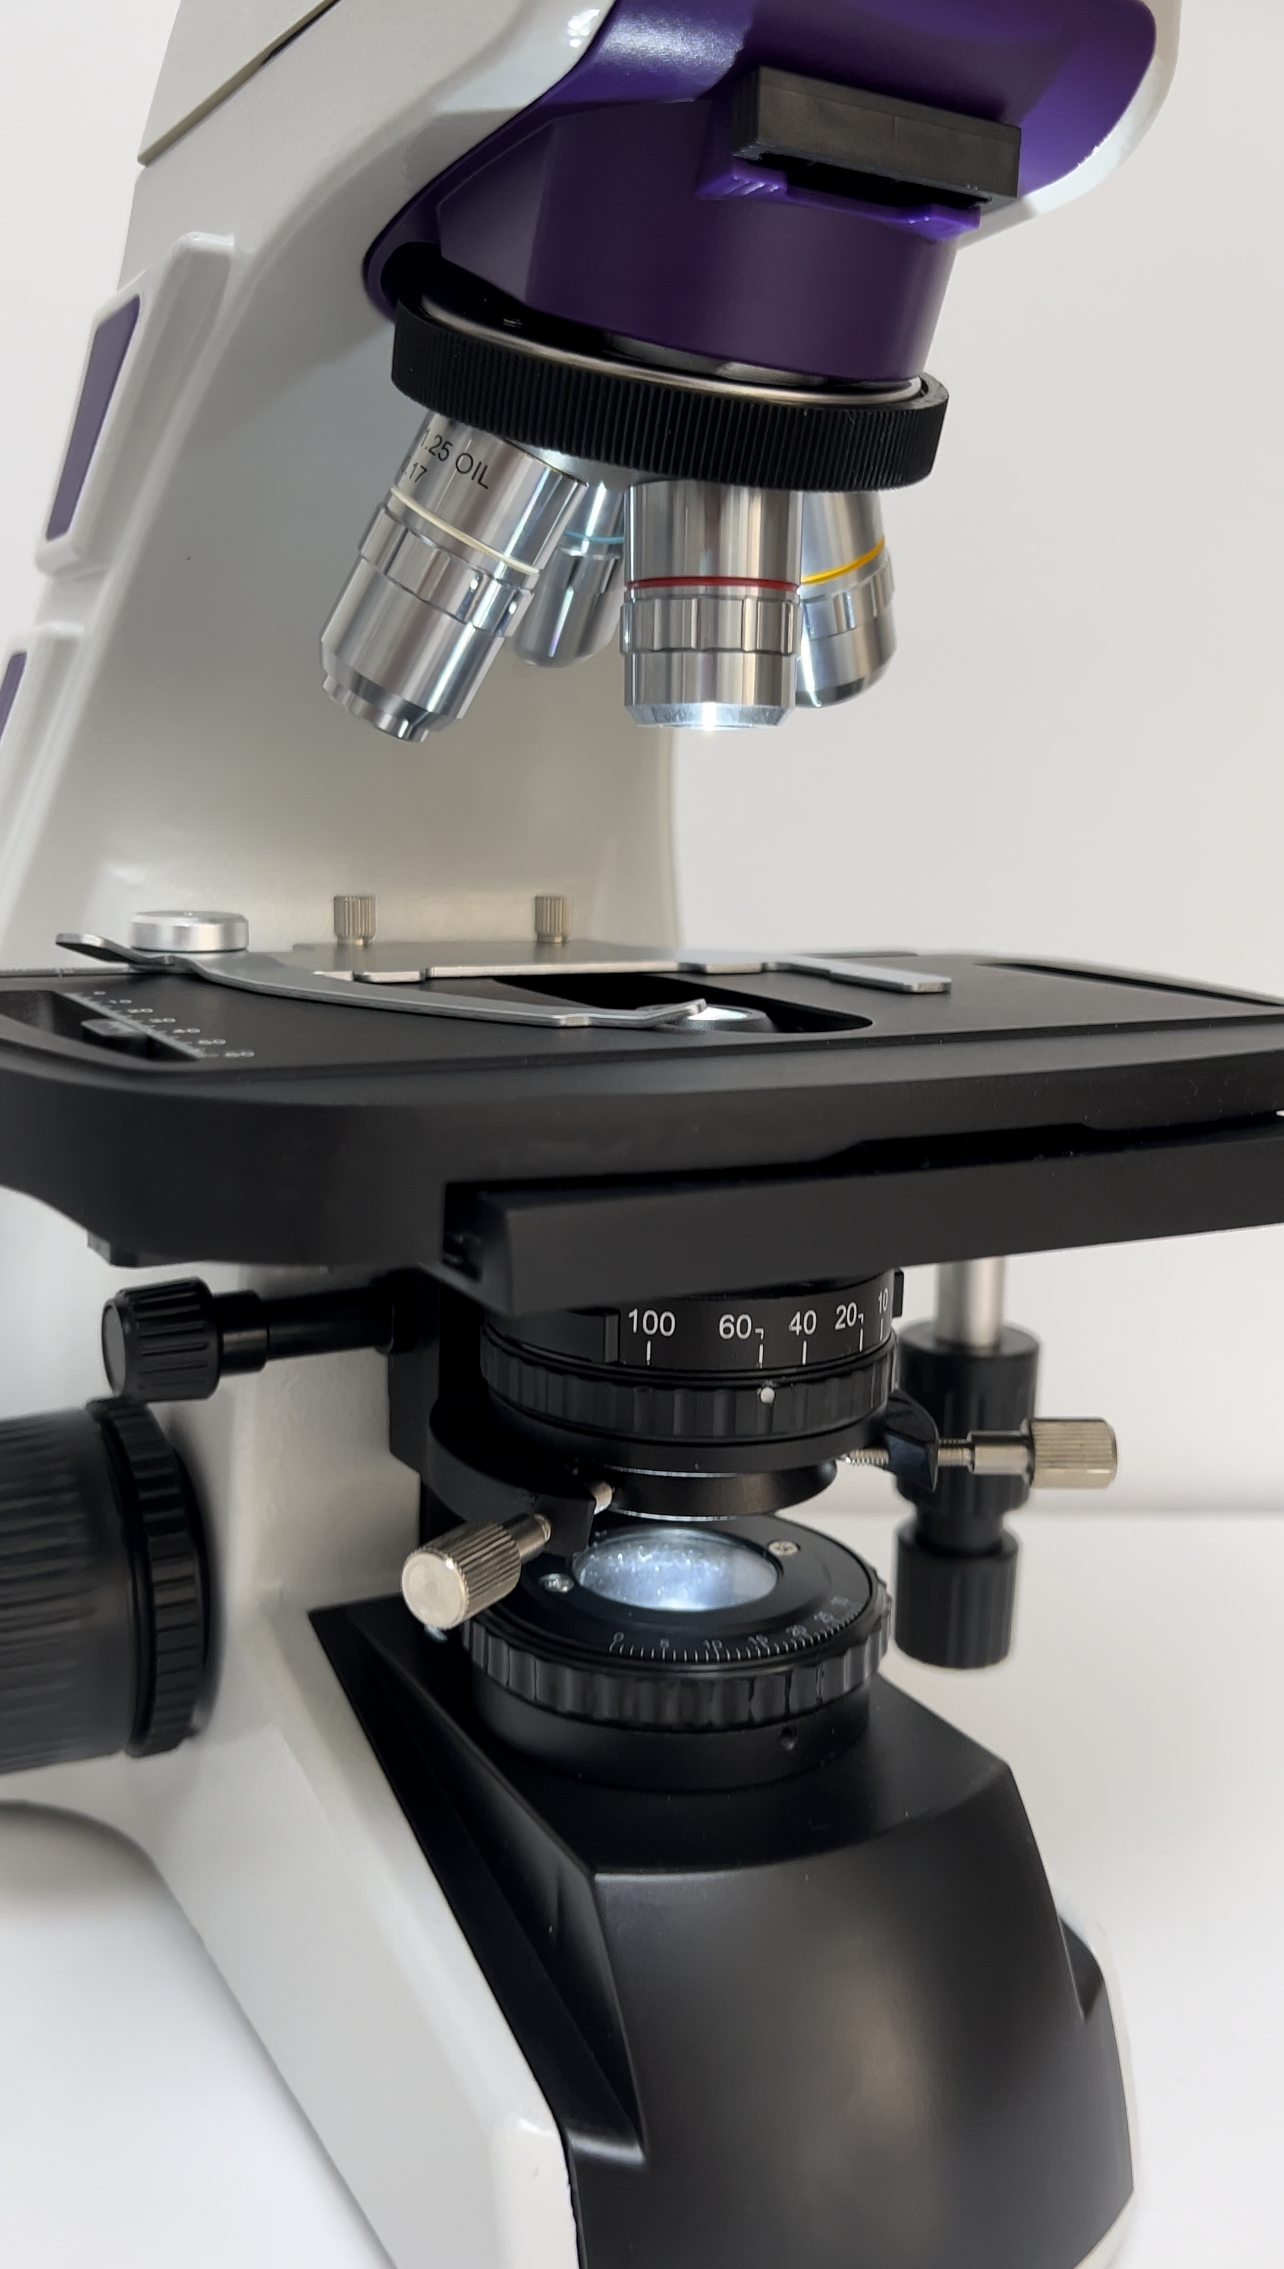 TT-2016B Microscope with articulated binocular head